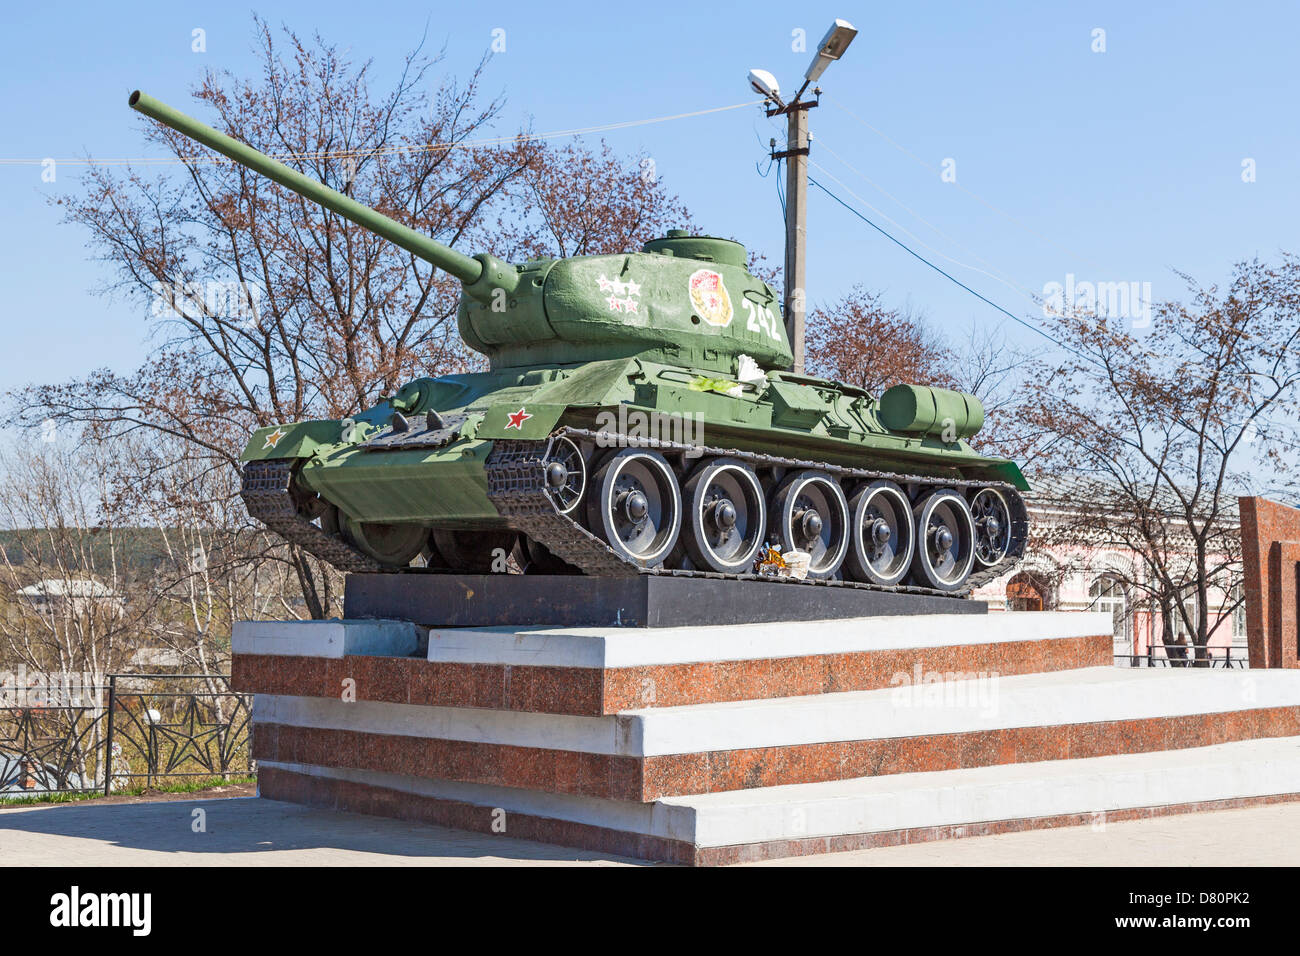 Kungur, Russia - Soviet T-34 tank in Victory Square (Ploshchad Pobedy) Stock Photo